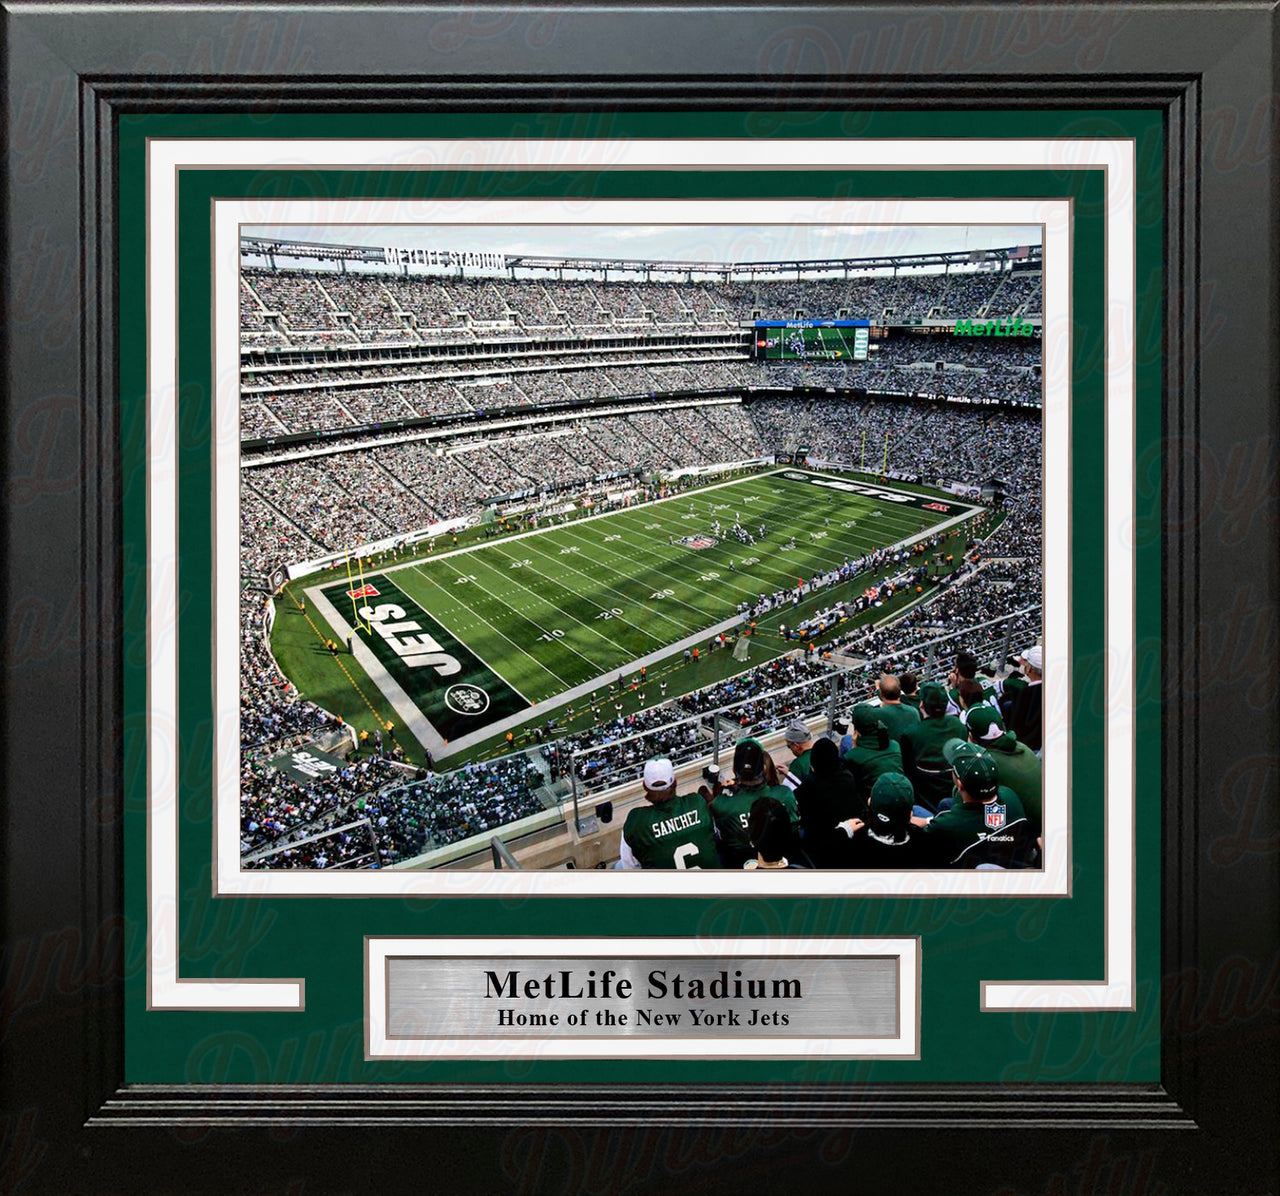 New York Jets MetLife Stadium Aerial View 8" x 10" Framed Football Photo - Dynasty Sports & Framing 